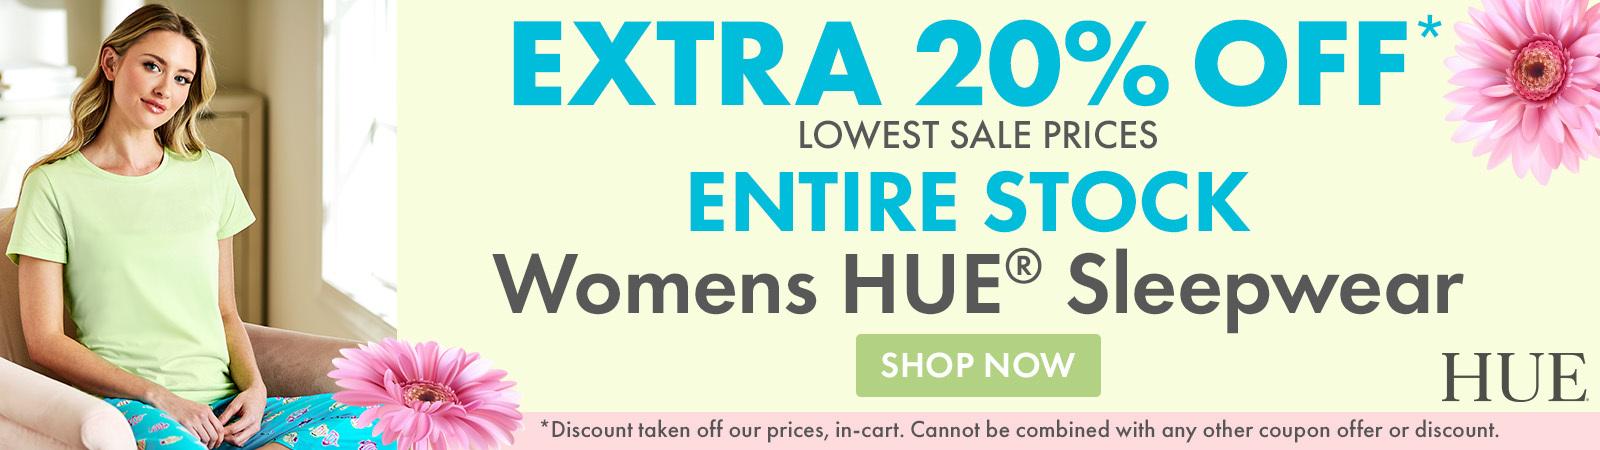 Extra 20% Off Entire Stock Womens HUE Sleepwear